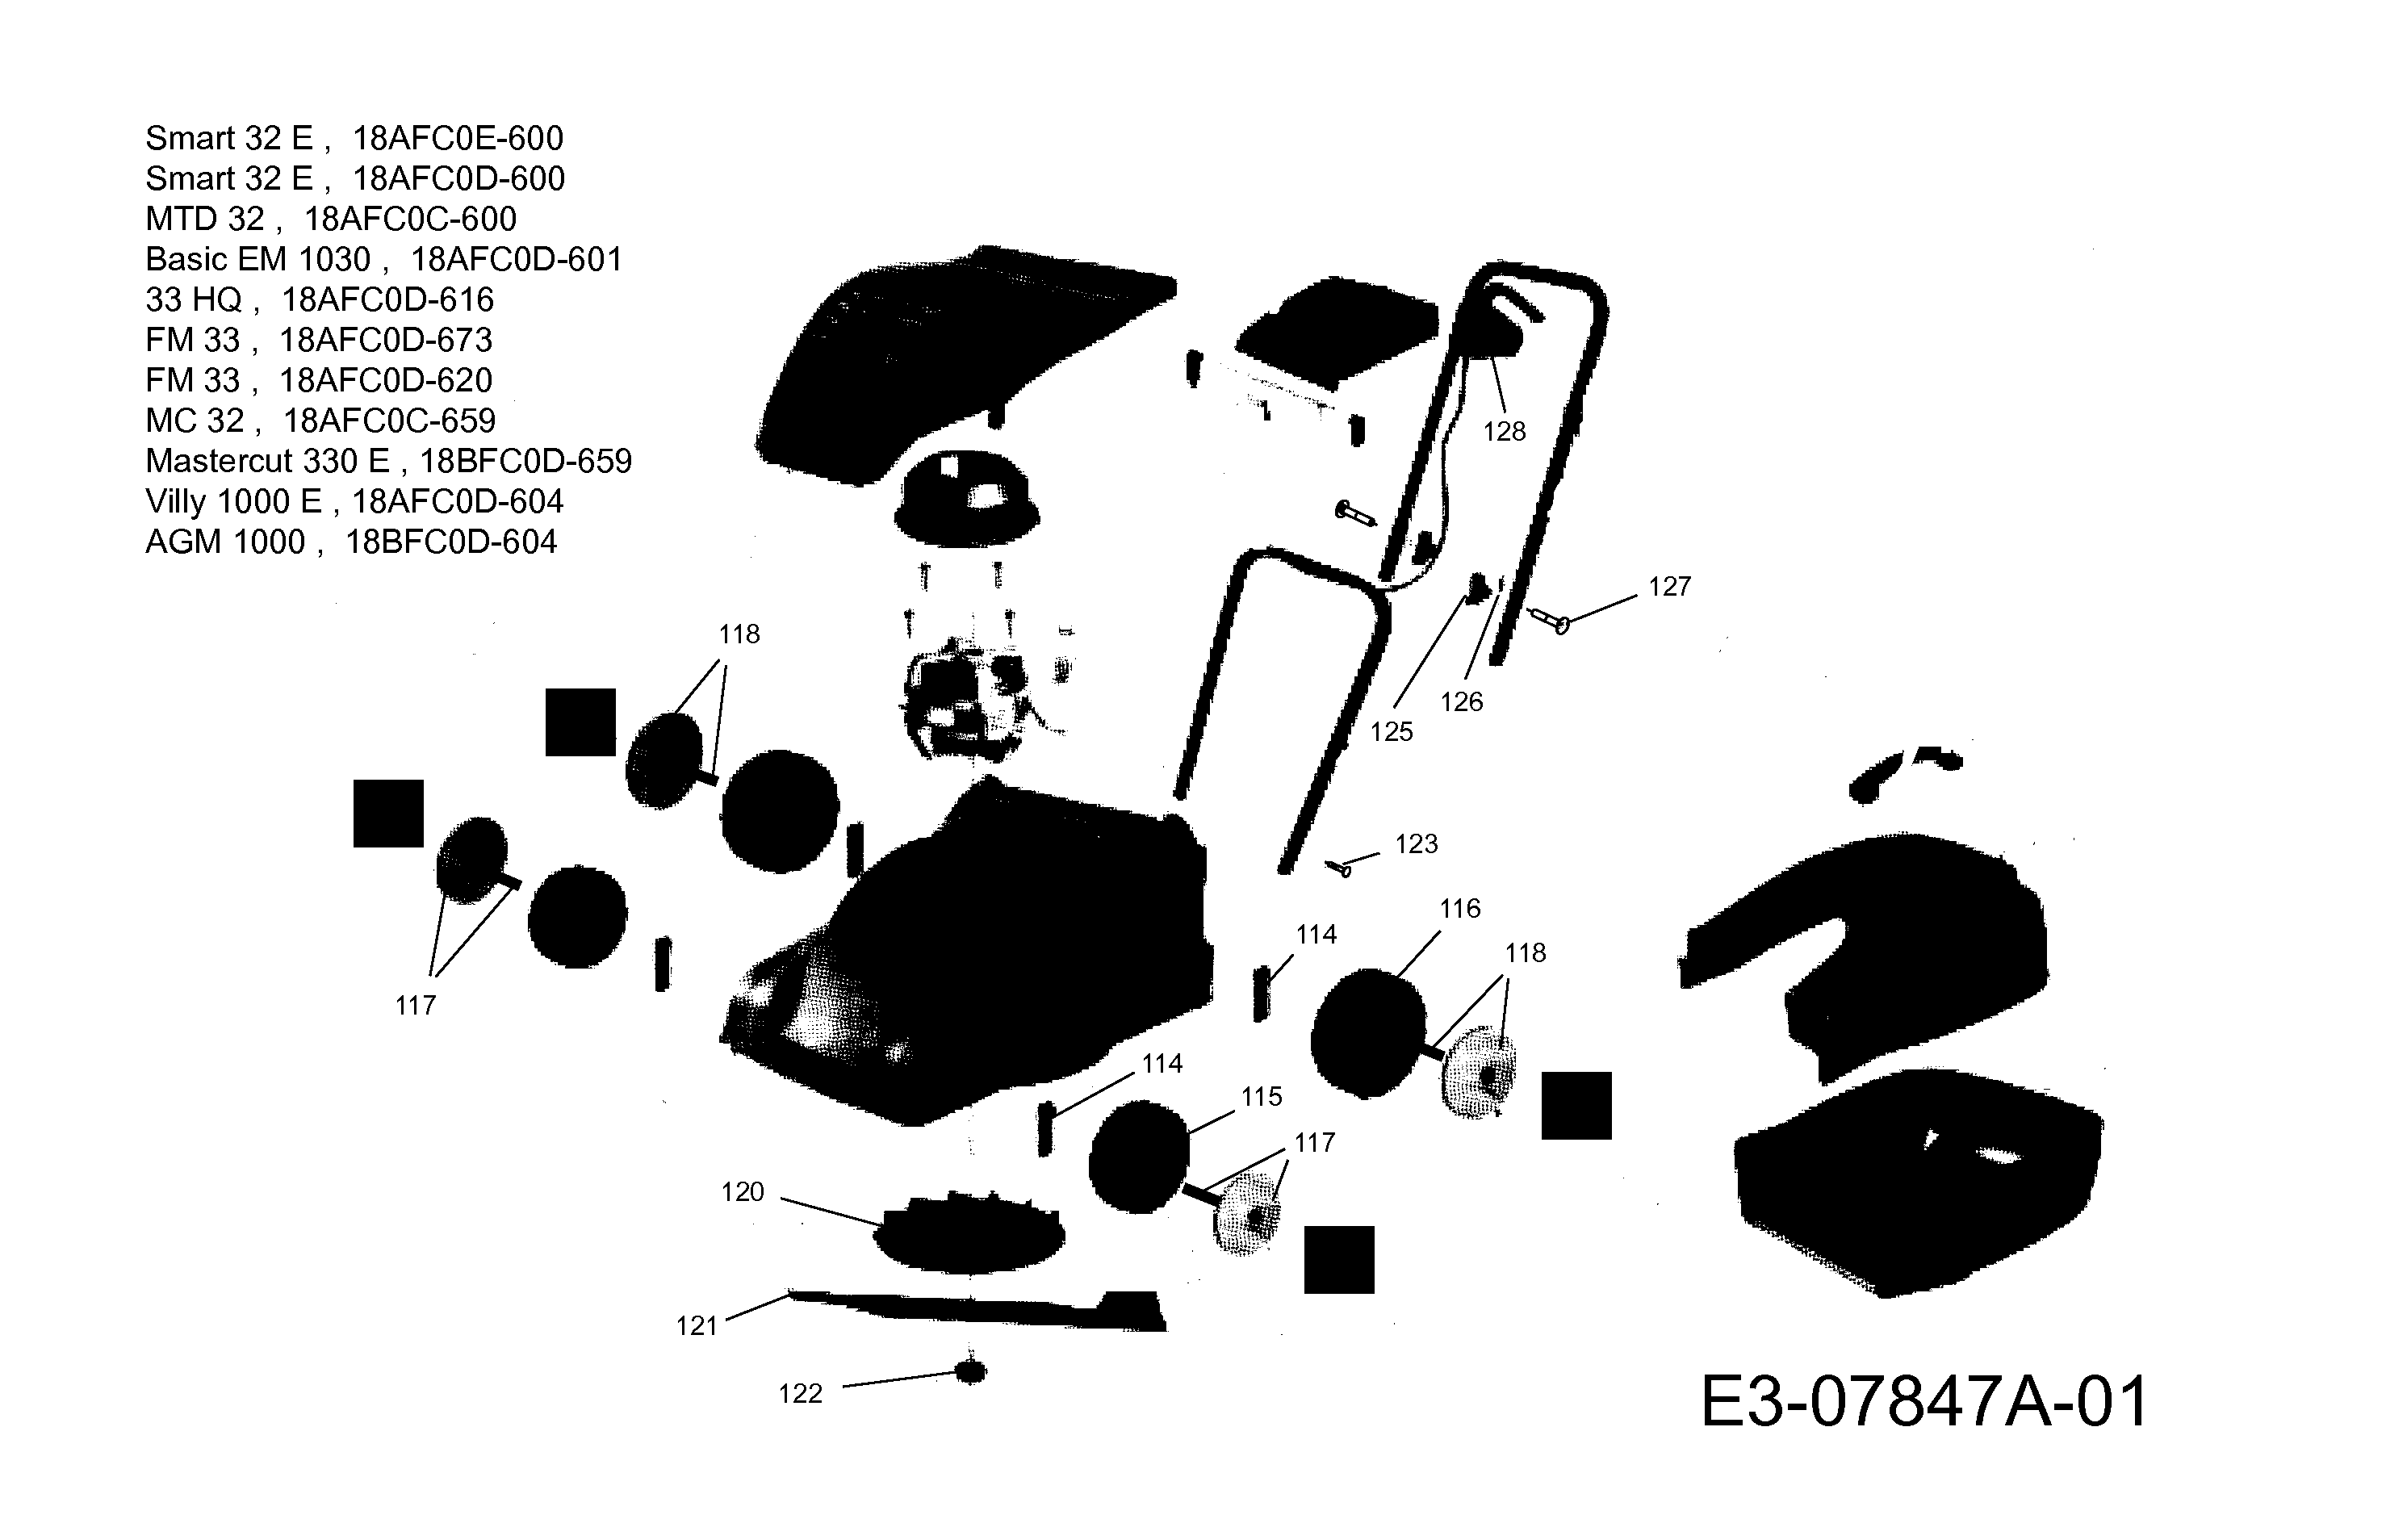 Grundgerät, 18AFC0D-620 (2013), FM 33, Elektromäher, Cmi